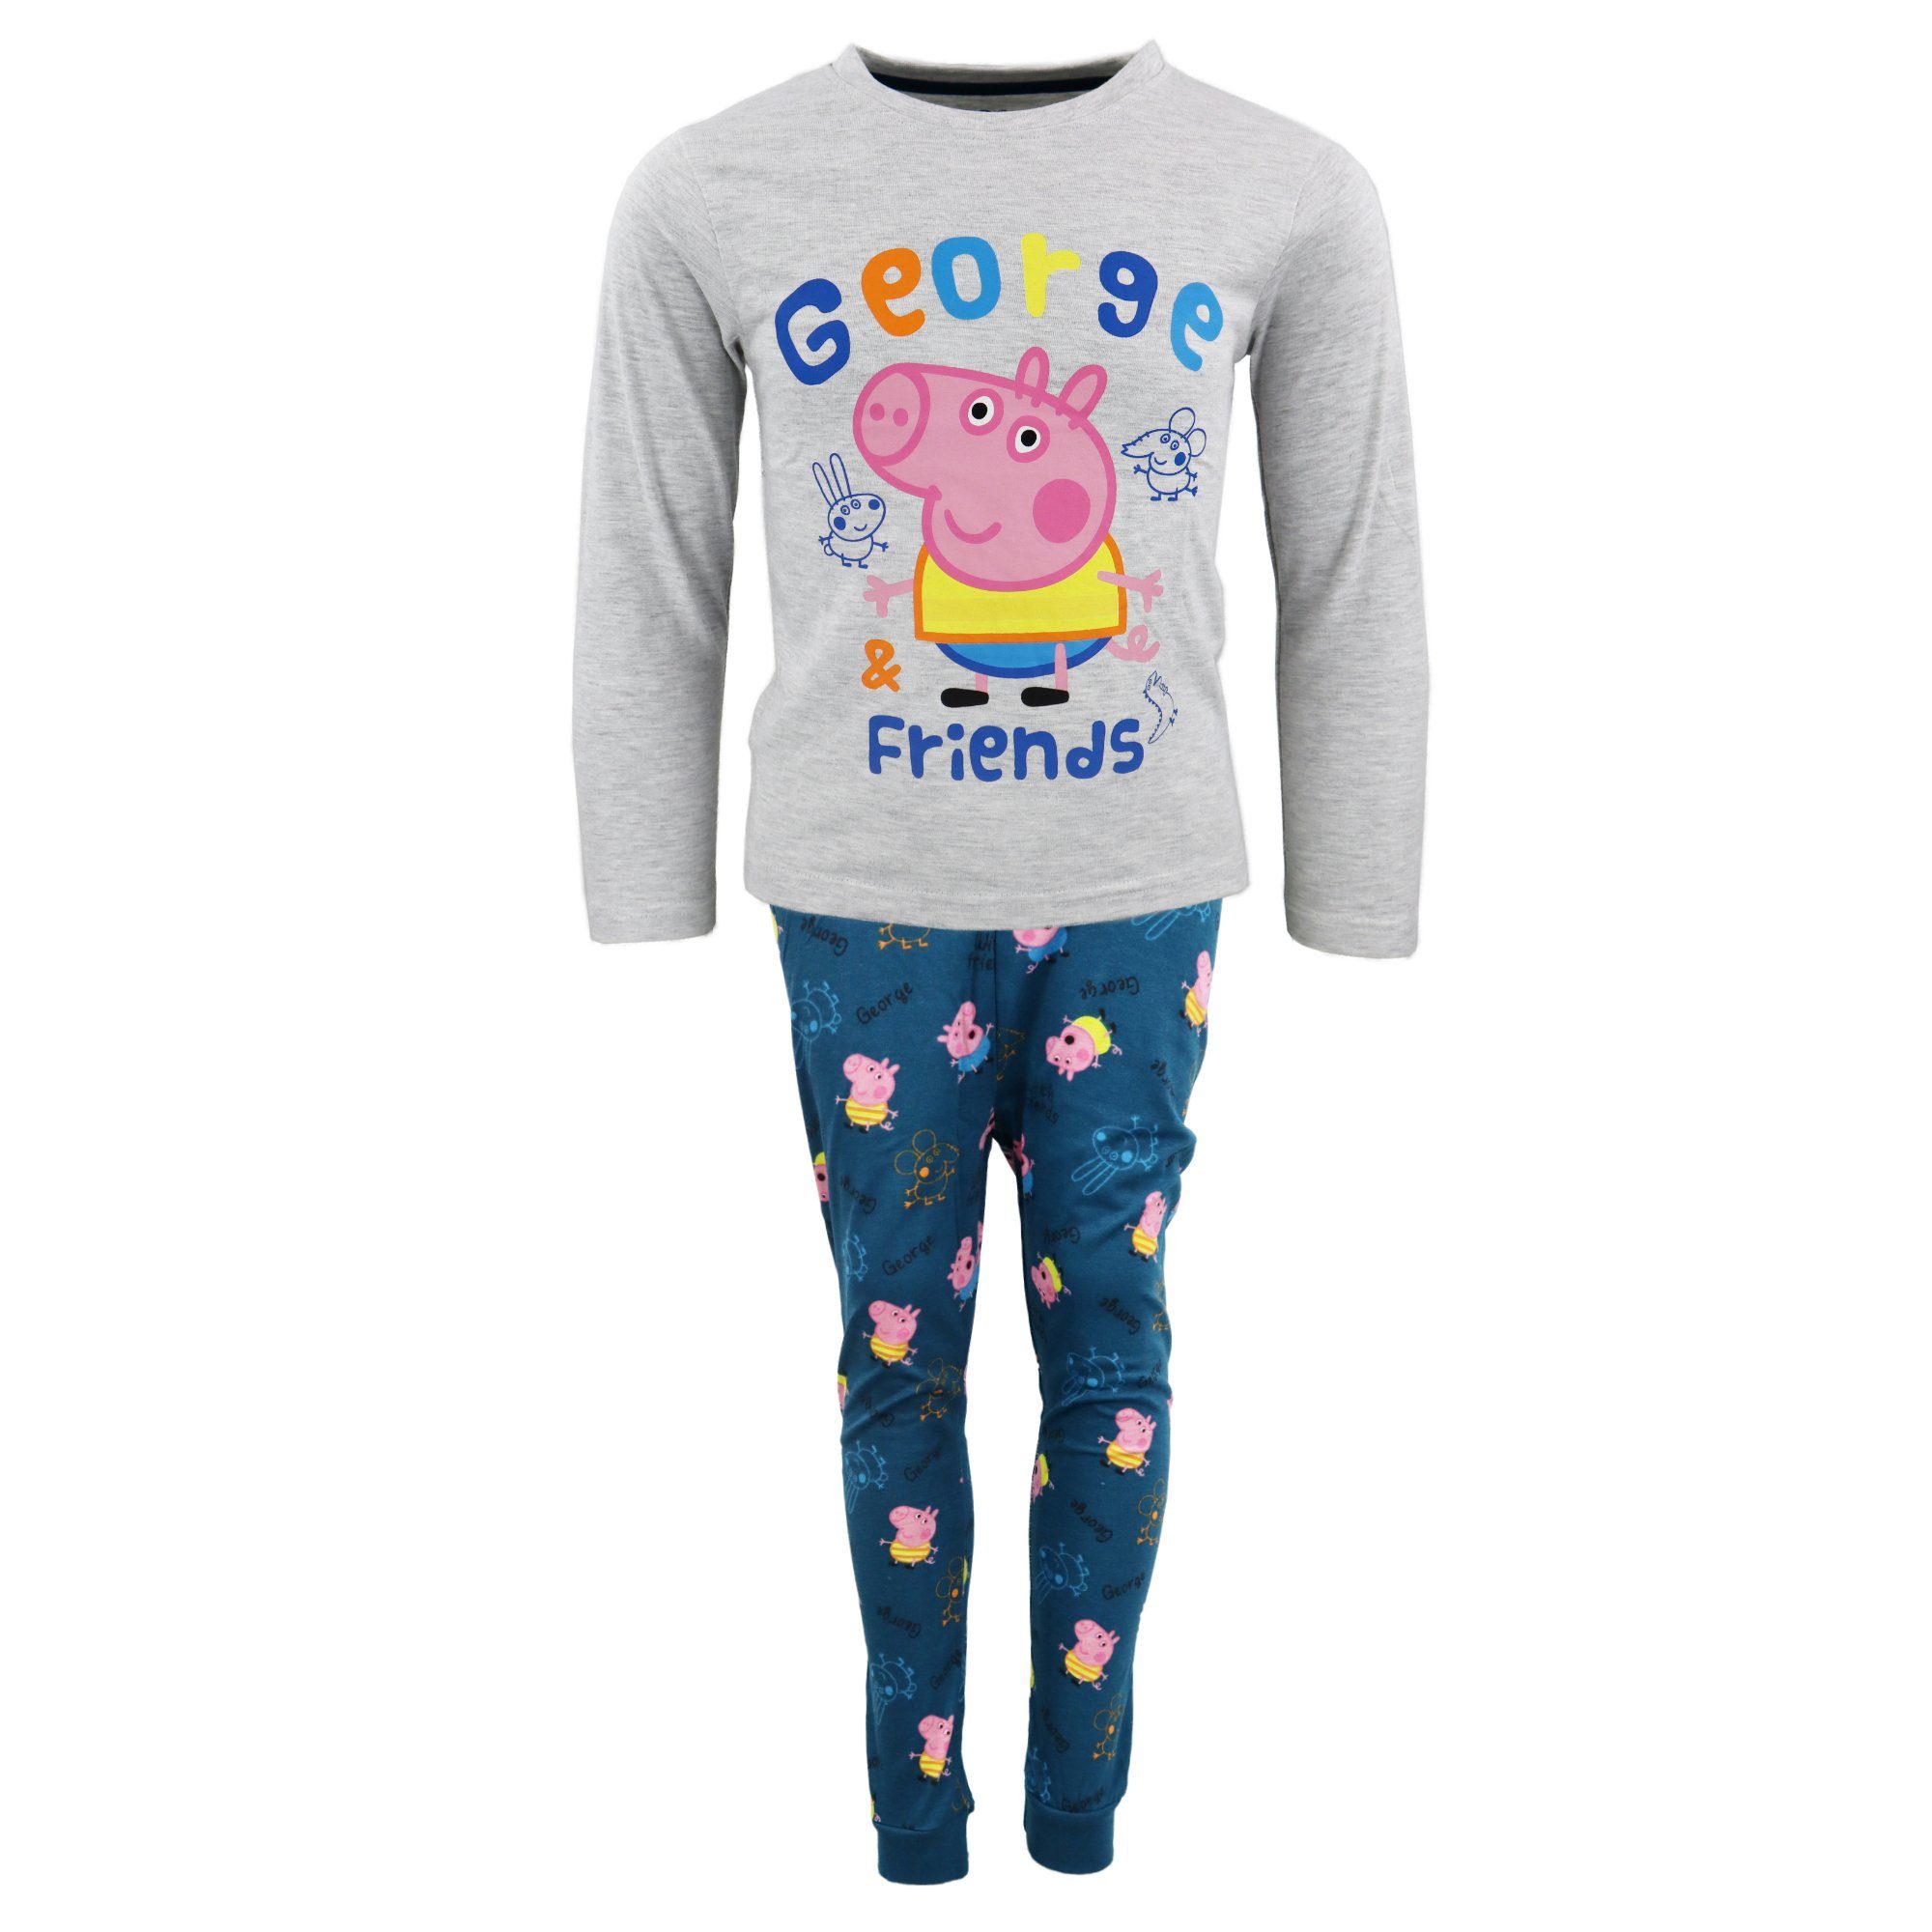 Peppa Pig Schlafanzug Peppa Wutz Pig George Kinder Jungen Pyjama Gr. 92 bis 116 Shirt Hose Hellgrau